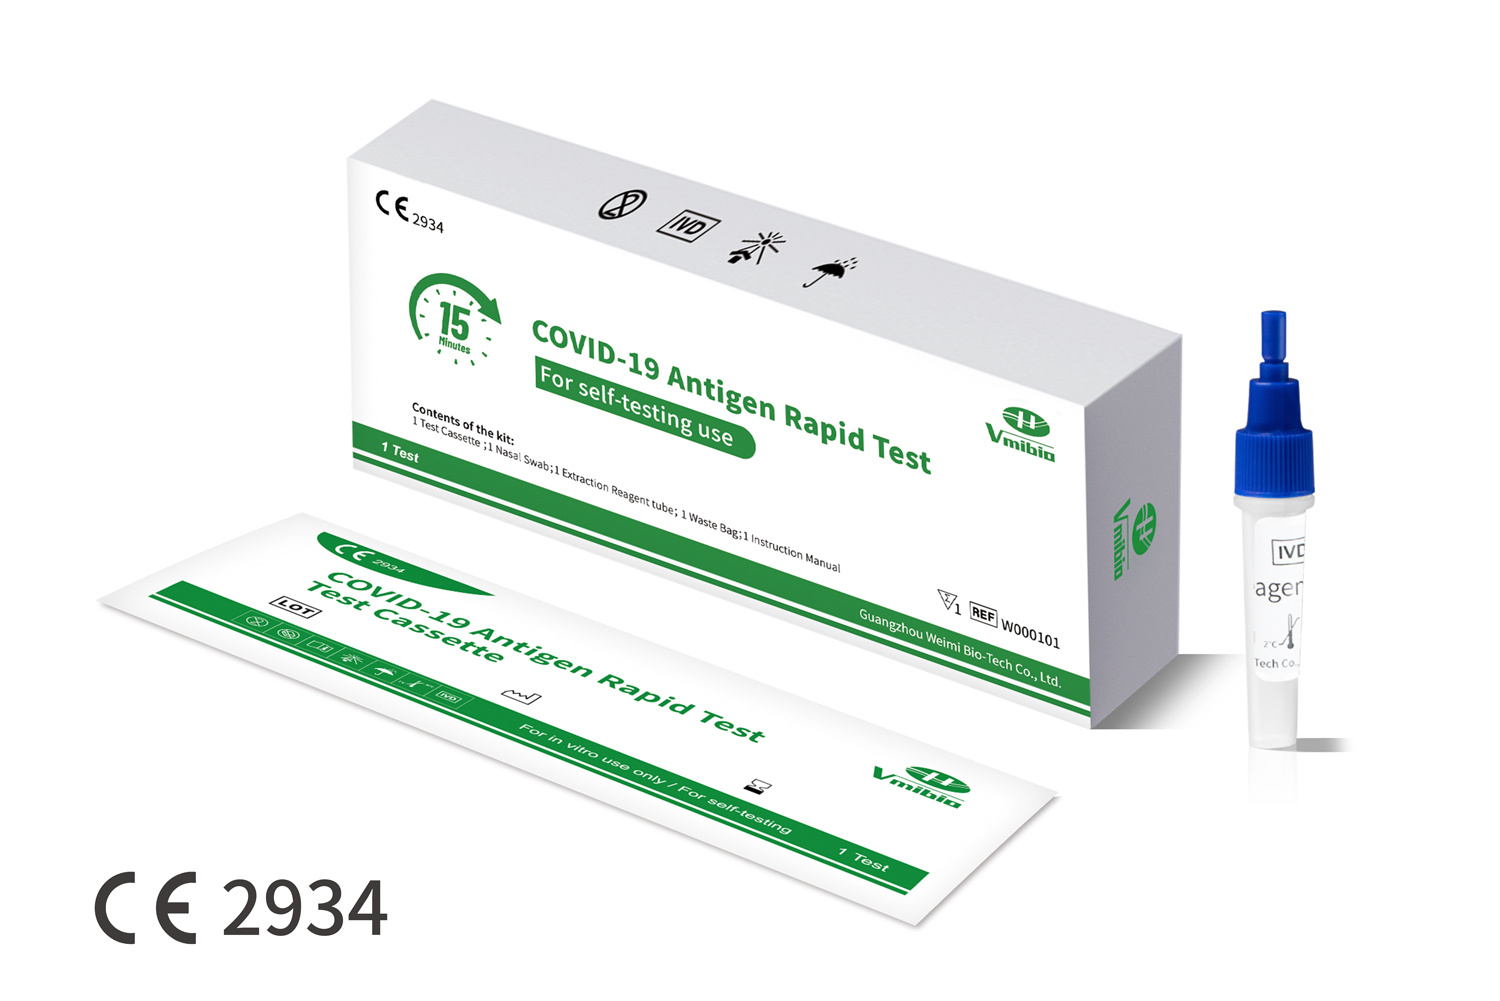 COVID-19 Antigen Rapid Test (For selft-testing, CE2934) 